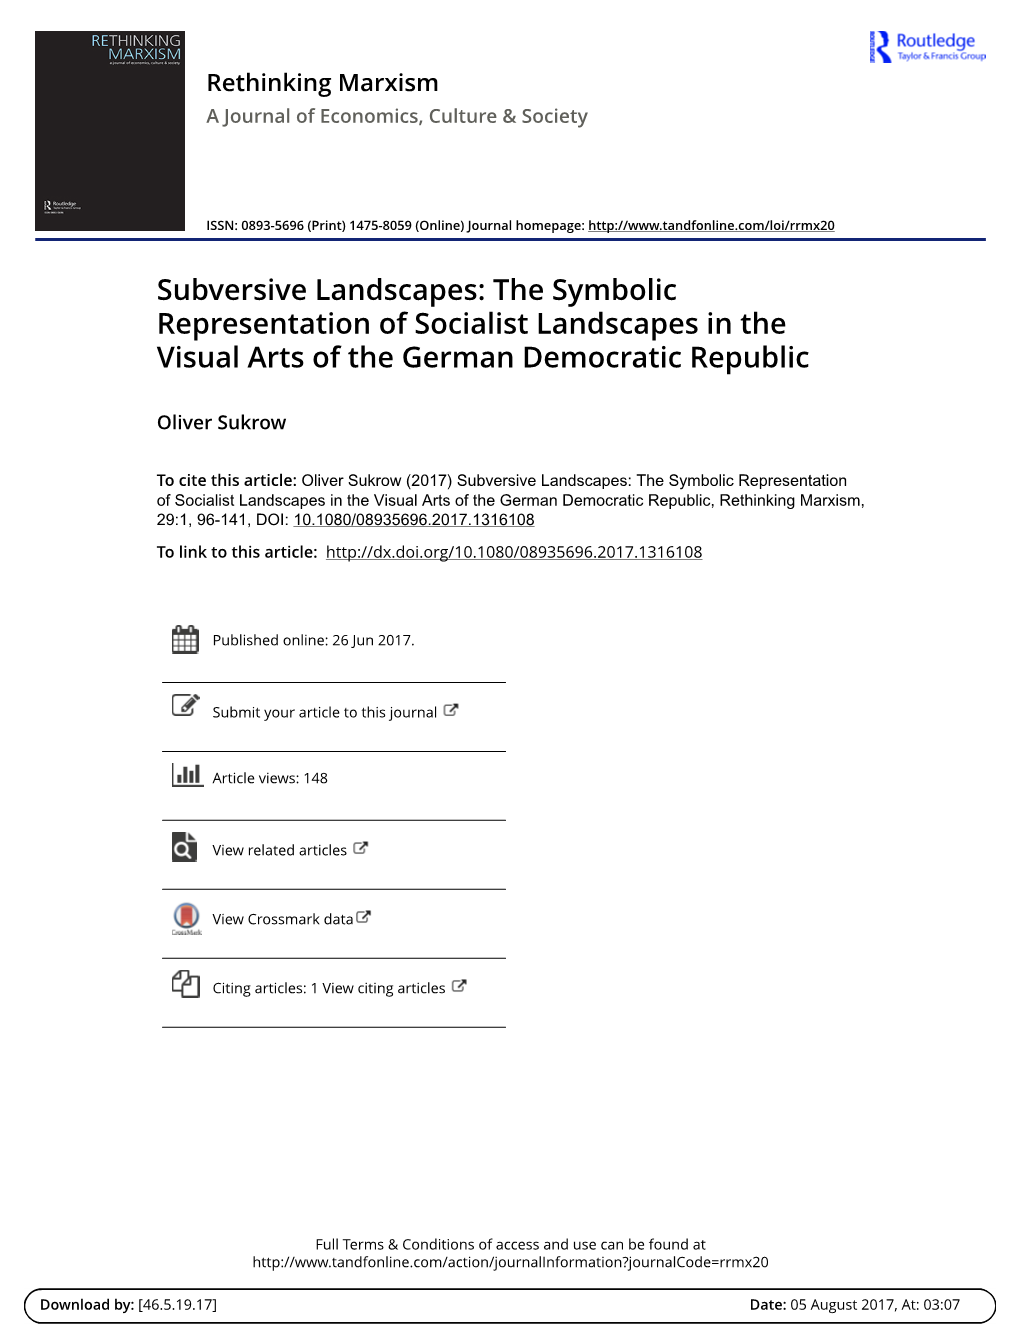 The Symbolic Representation of Socialist Landscapes in the Visual Arts of the German Democratic Republic